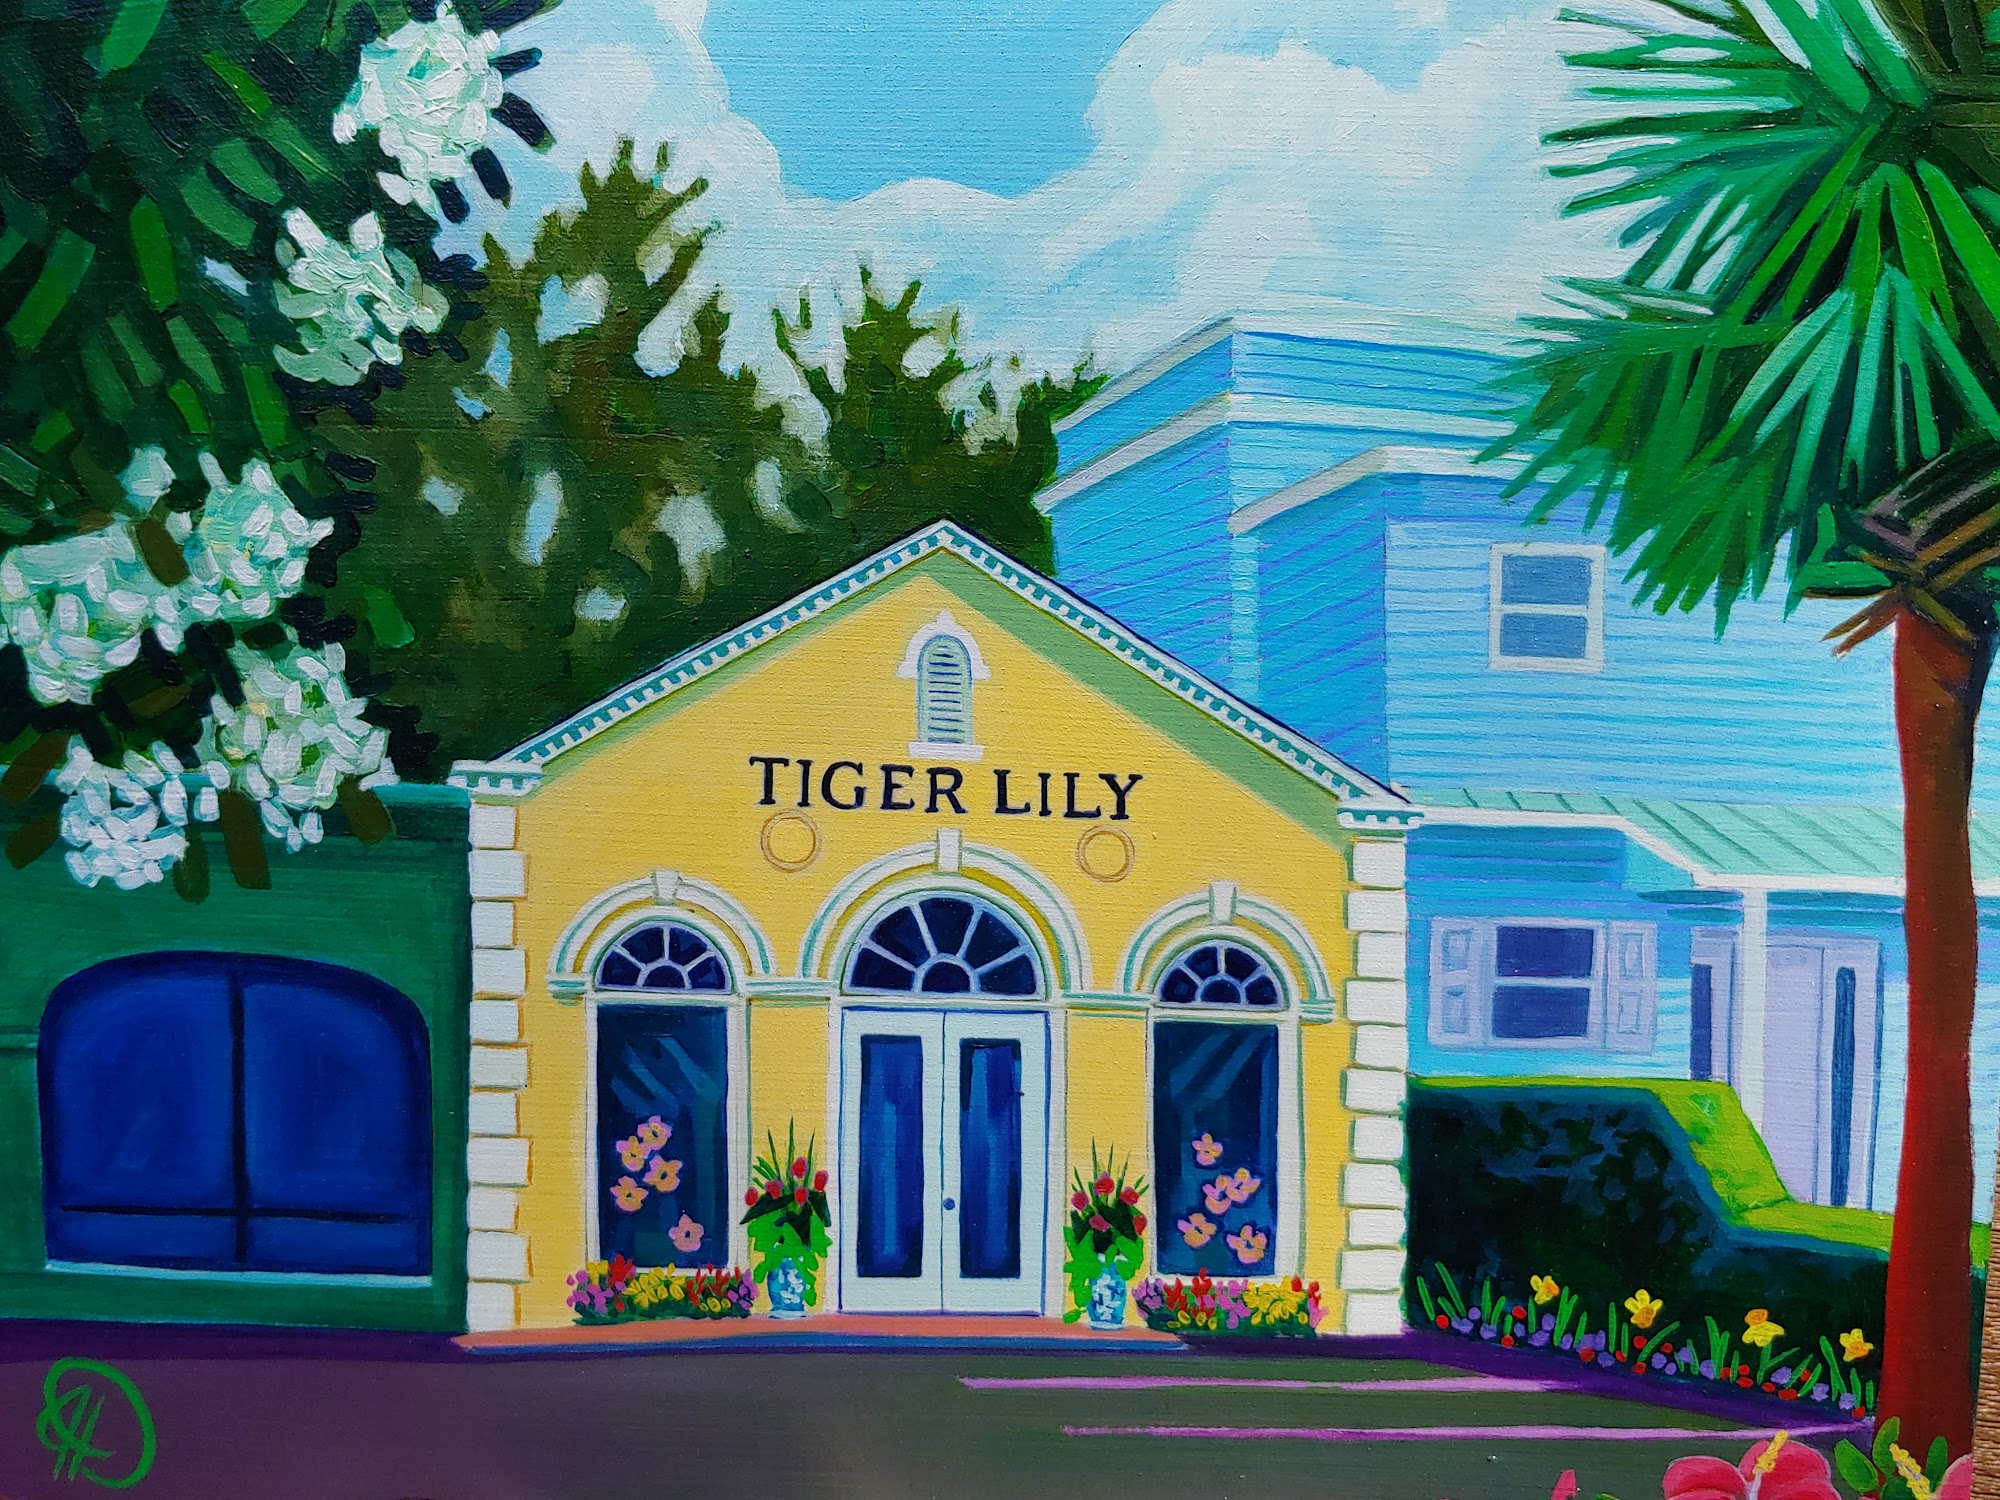 Tiger Lily Florist